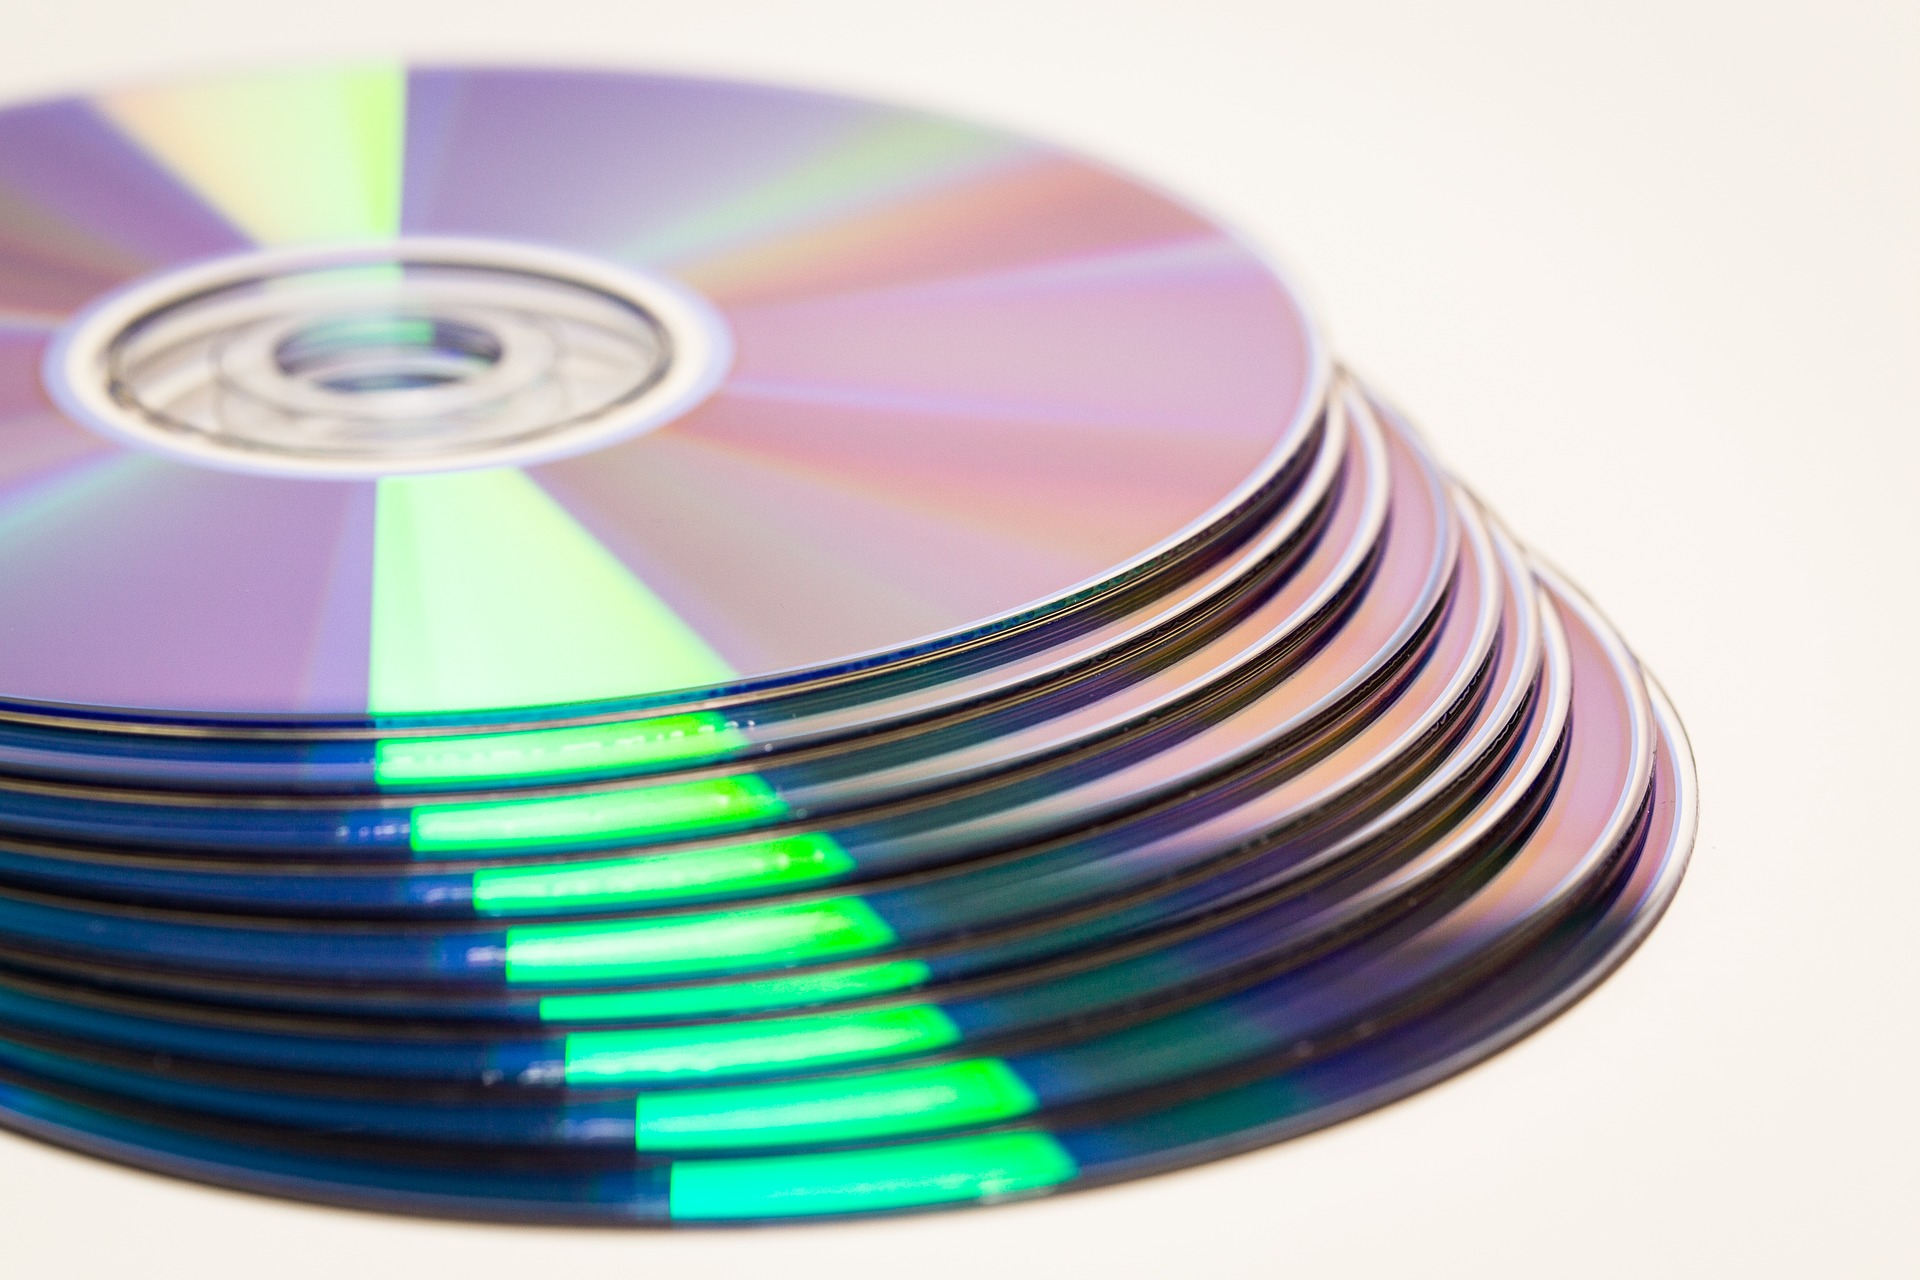 Stack of discs